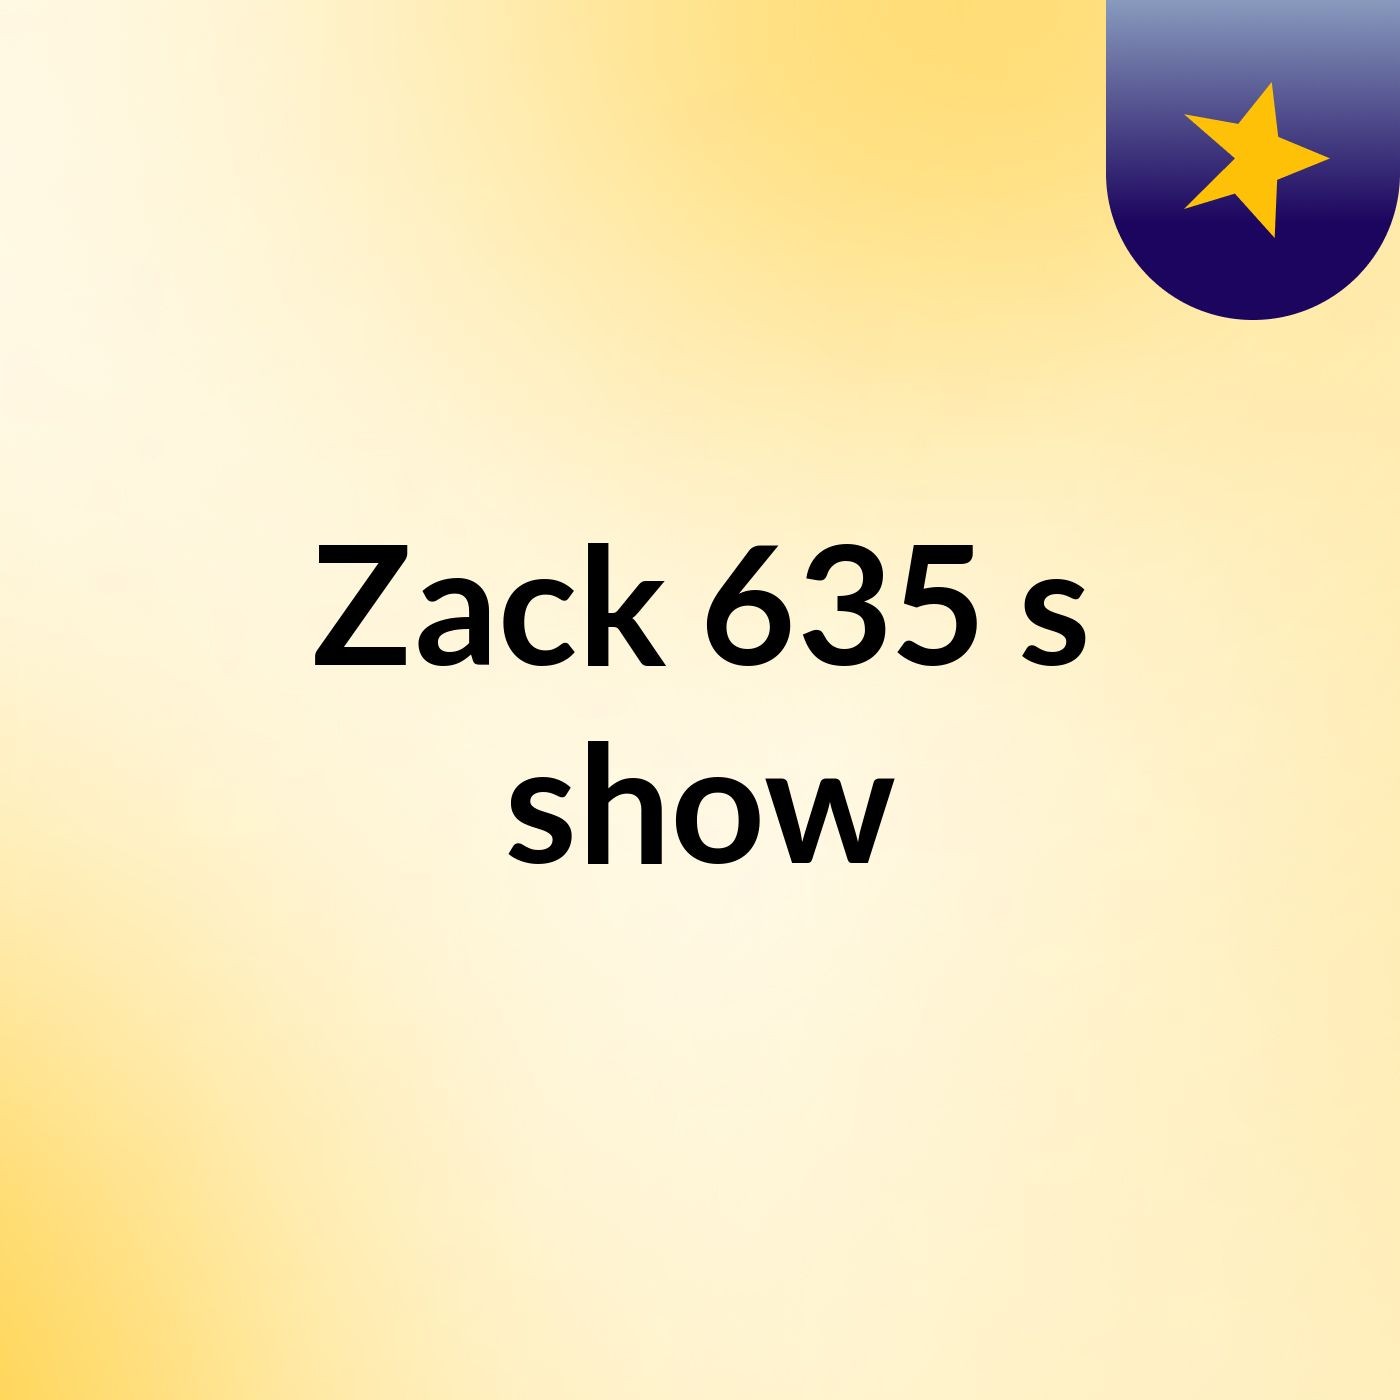 Zack 635's show